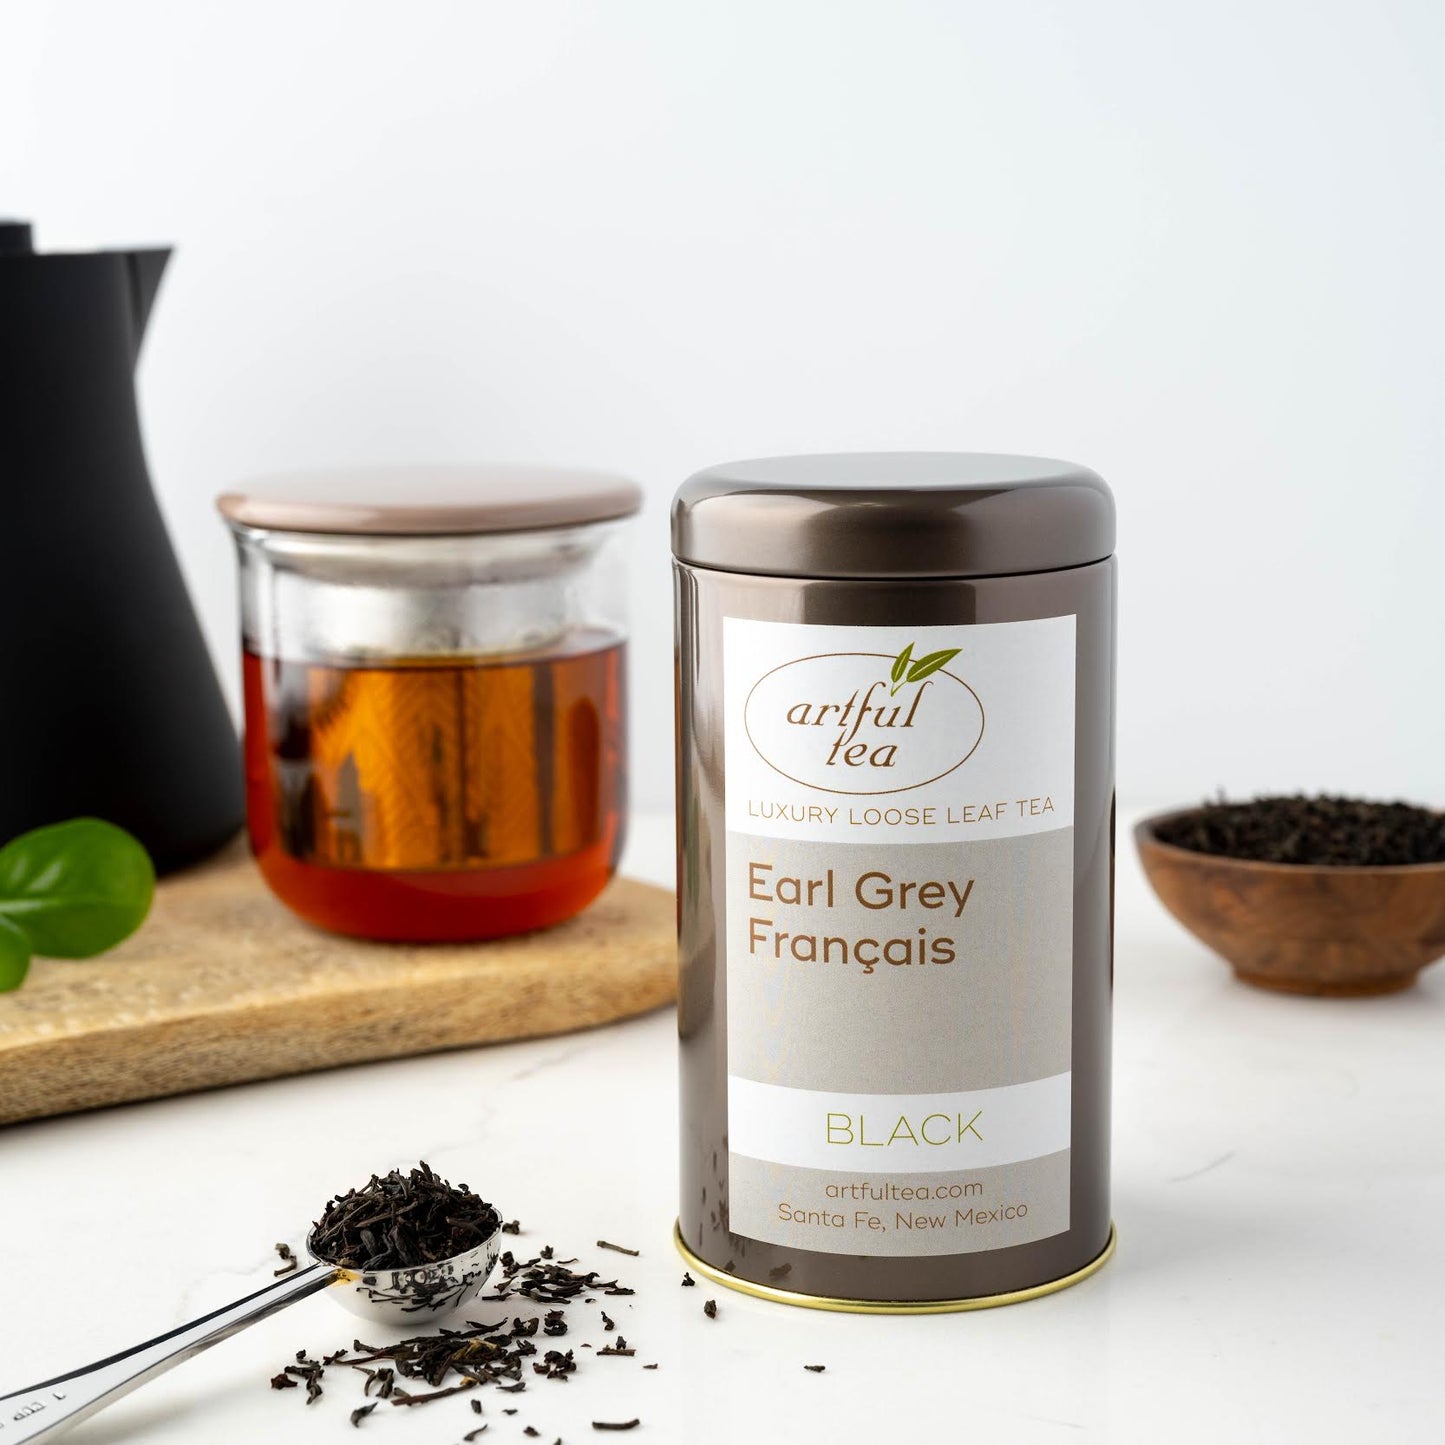 Earl Grey Français Black Tea